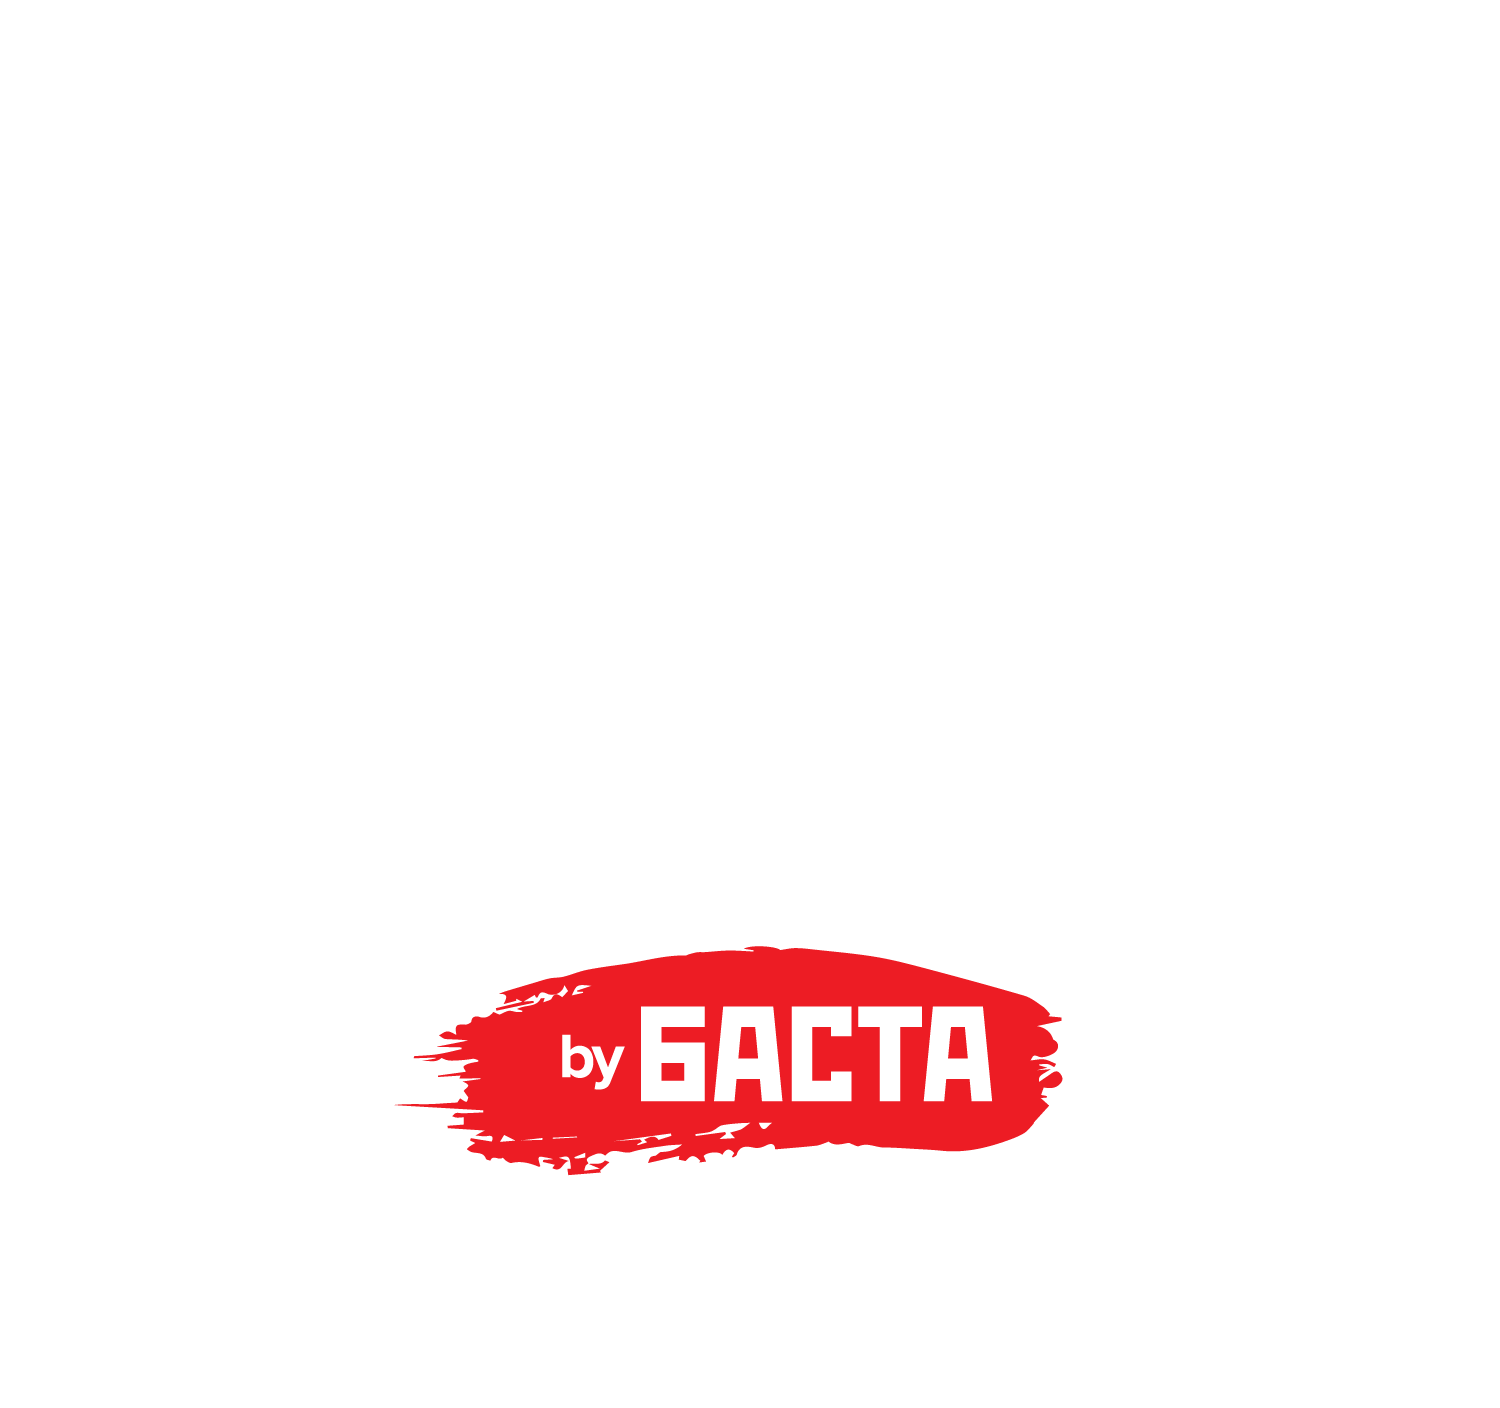 Фрэнк Баста. Frank basta лого. Фрэнк бай Баста. Ресторан Франк бай Баста. Фрэнки бу